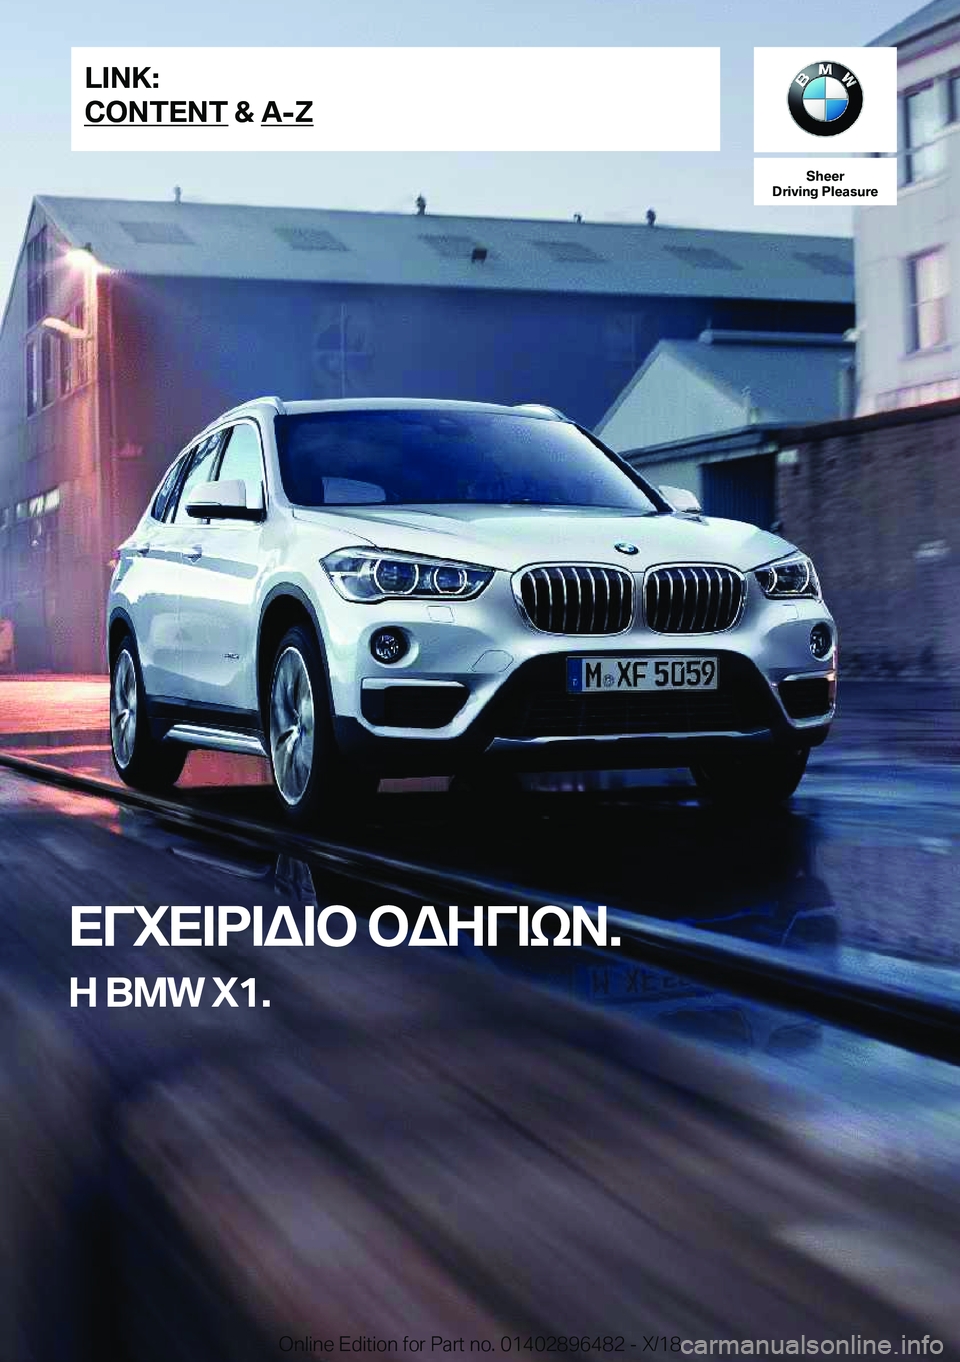 BMW X1 2019  ΟΔΗΓΌΣ ΧΡΉΣΗΣ (in Greek) �S�h�e�e�r
�D�r�i�v�i�n�g��P�l�e�a�s�u�r�e
XViX=d=W=b�bWZV=kA�.
Z��B�M�W��X�1�.�L�I�N�K�:
�C�O�N�T�E�N�T��&��A�-�Z�O�n�l�i�n�e��E�d�i�t�i�o�n��f�o�r��P�a�r�t��n�o�.��0�1�4